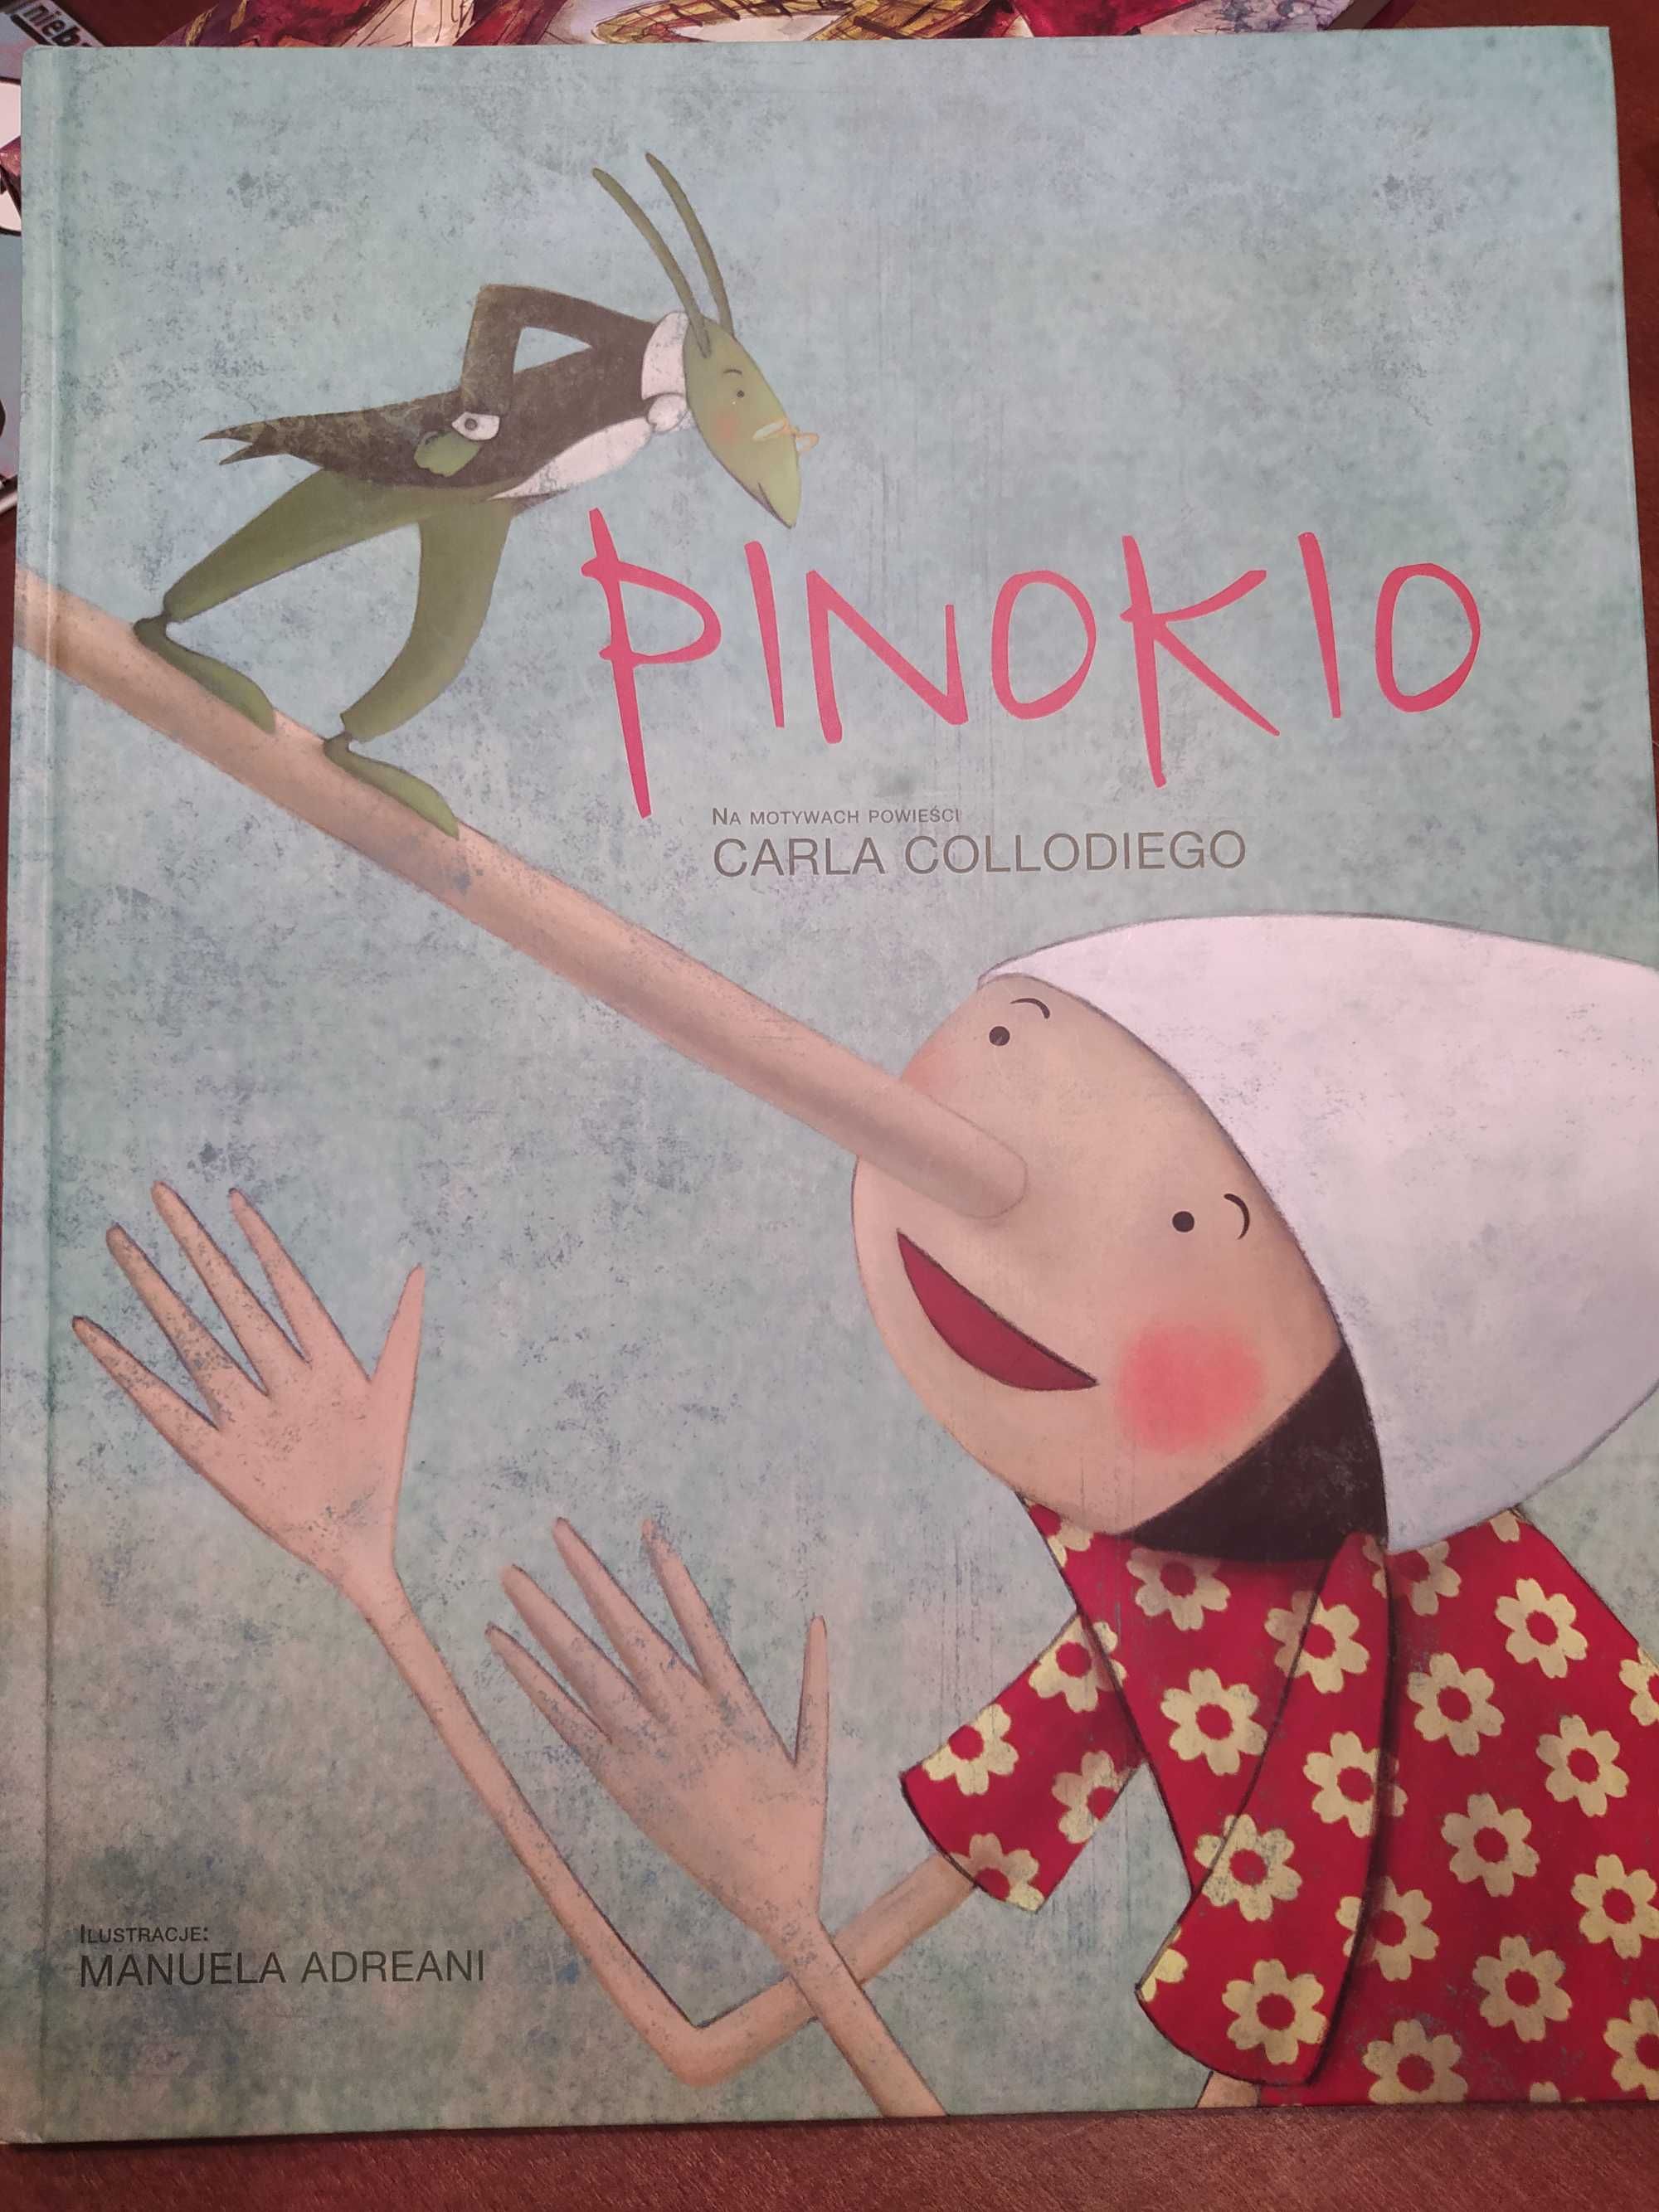 Pinokio - ilustracje Manuela Adreani